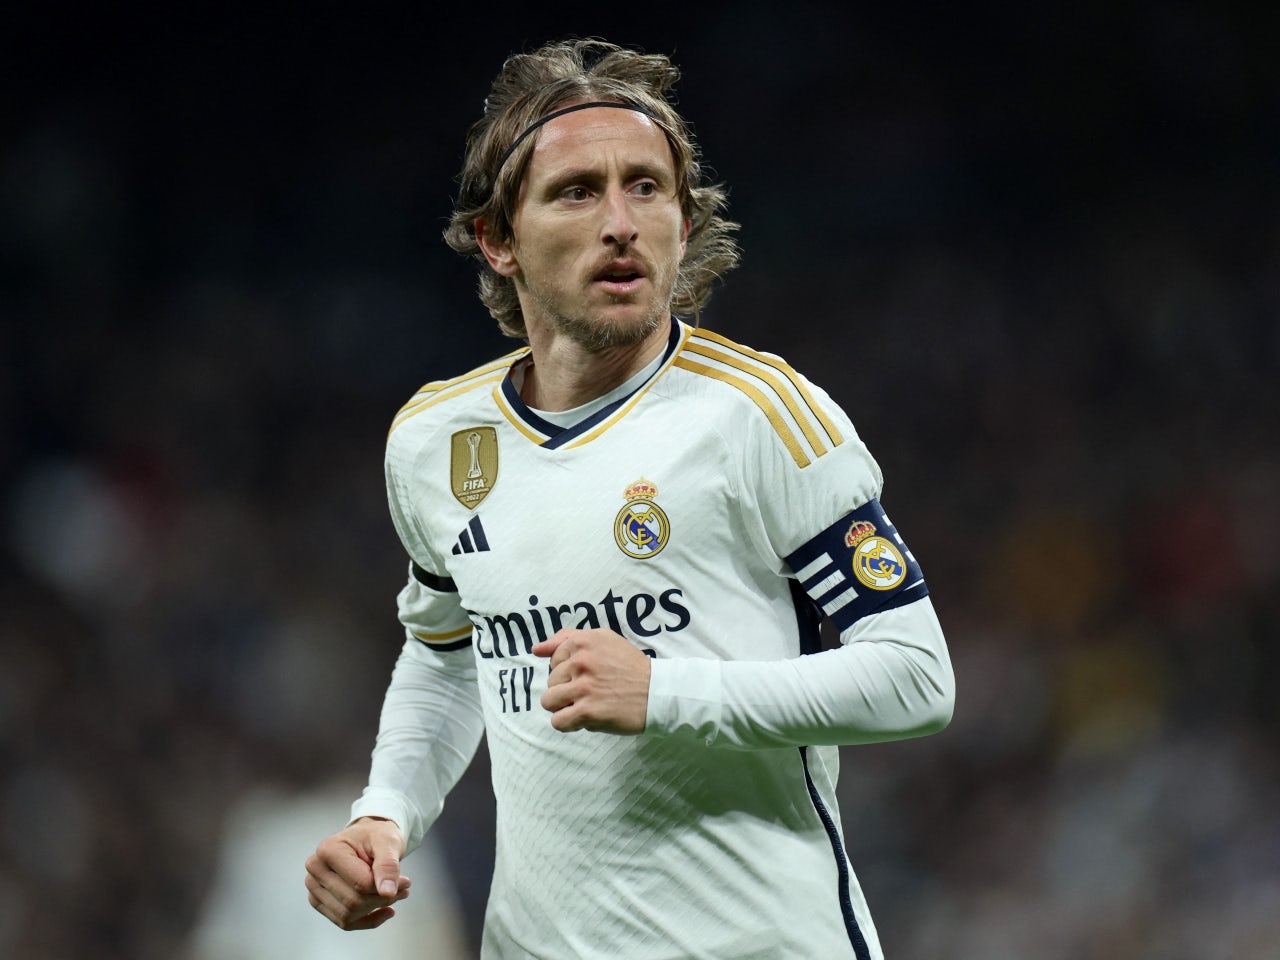 Dinamo Zagreb take unusual step to lure Real Madrid's Luka Modric back to club